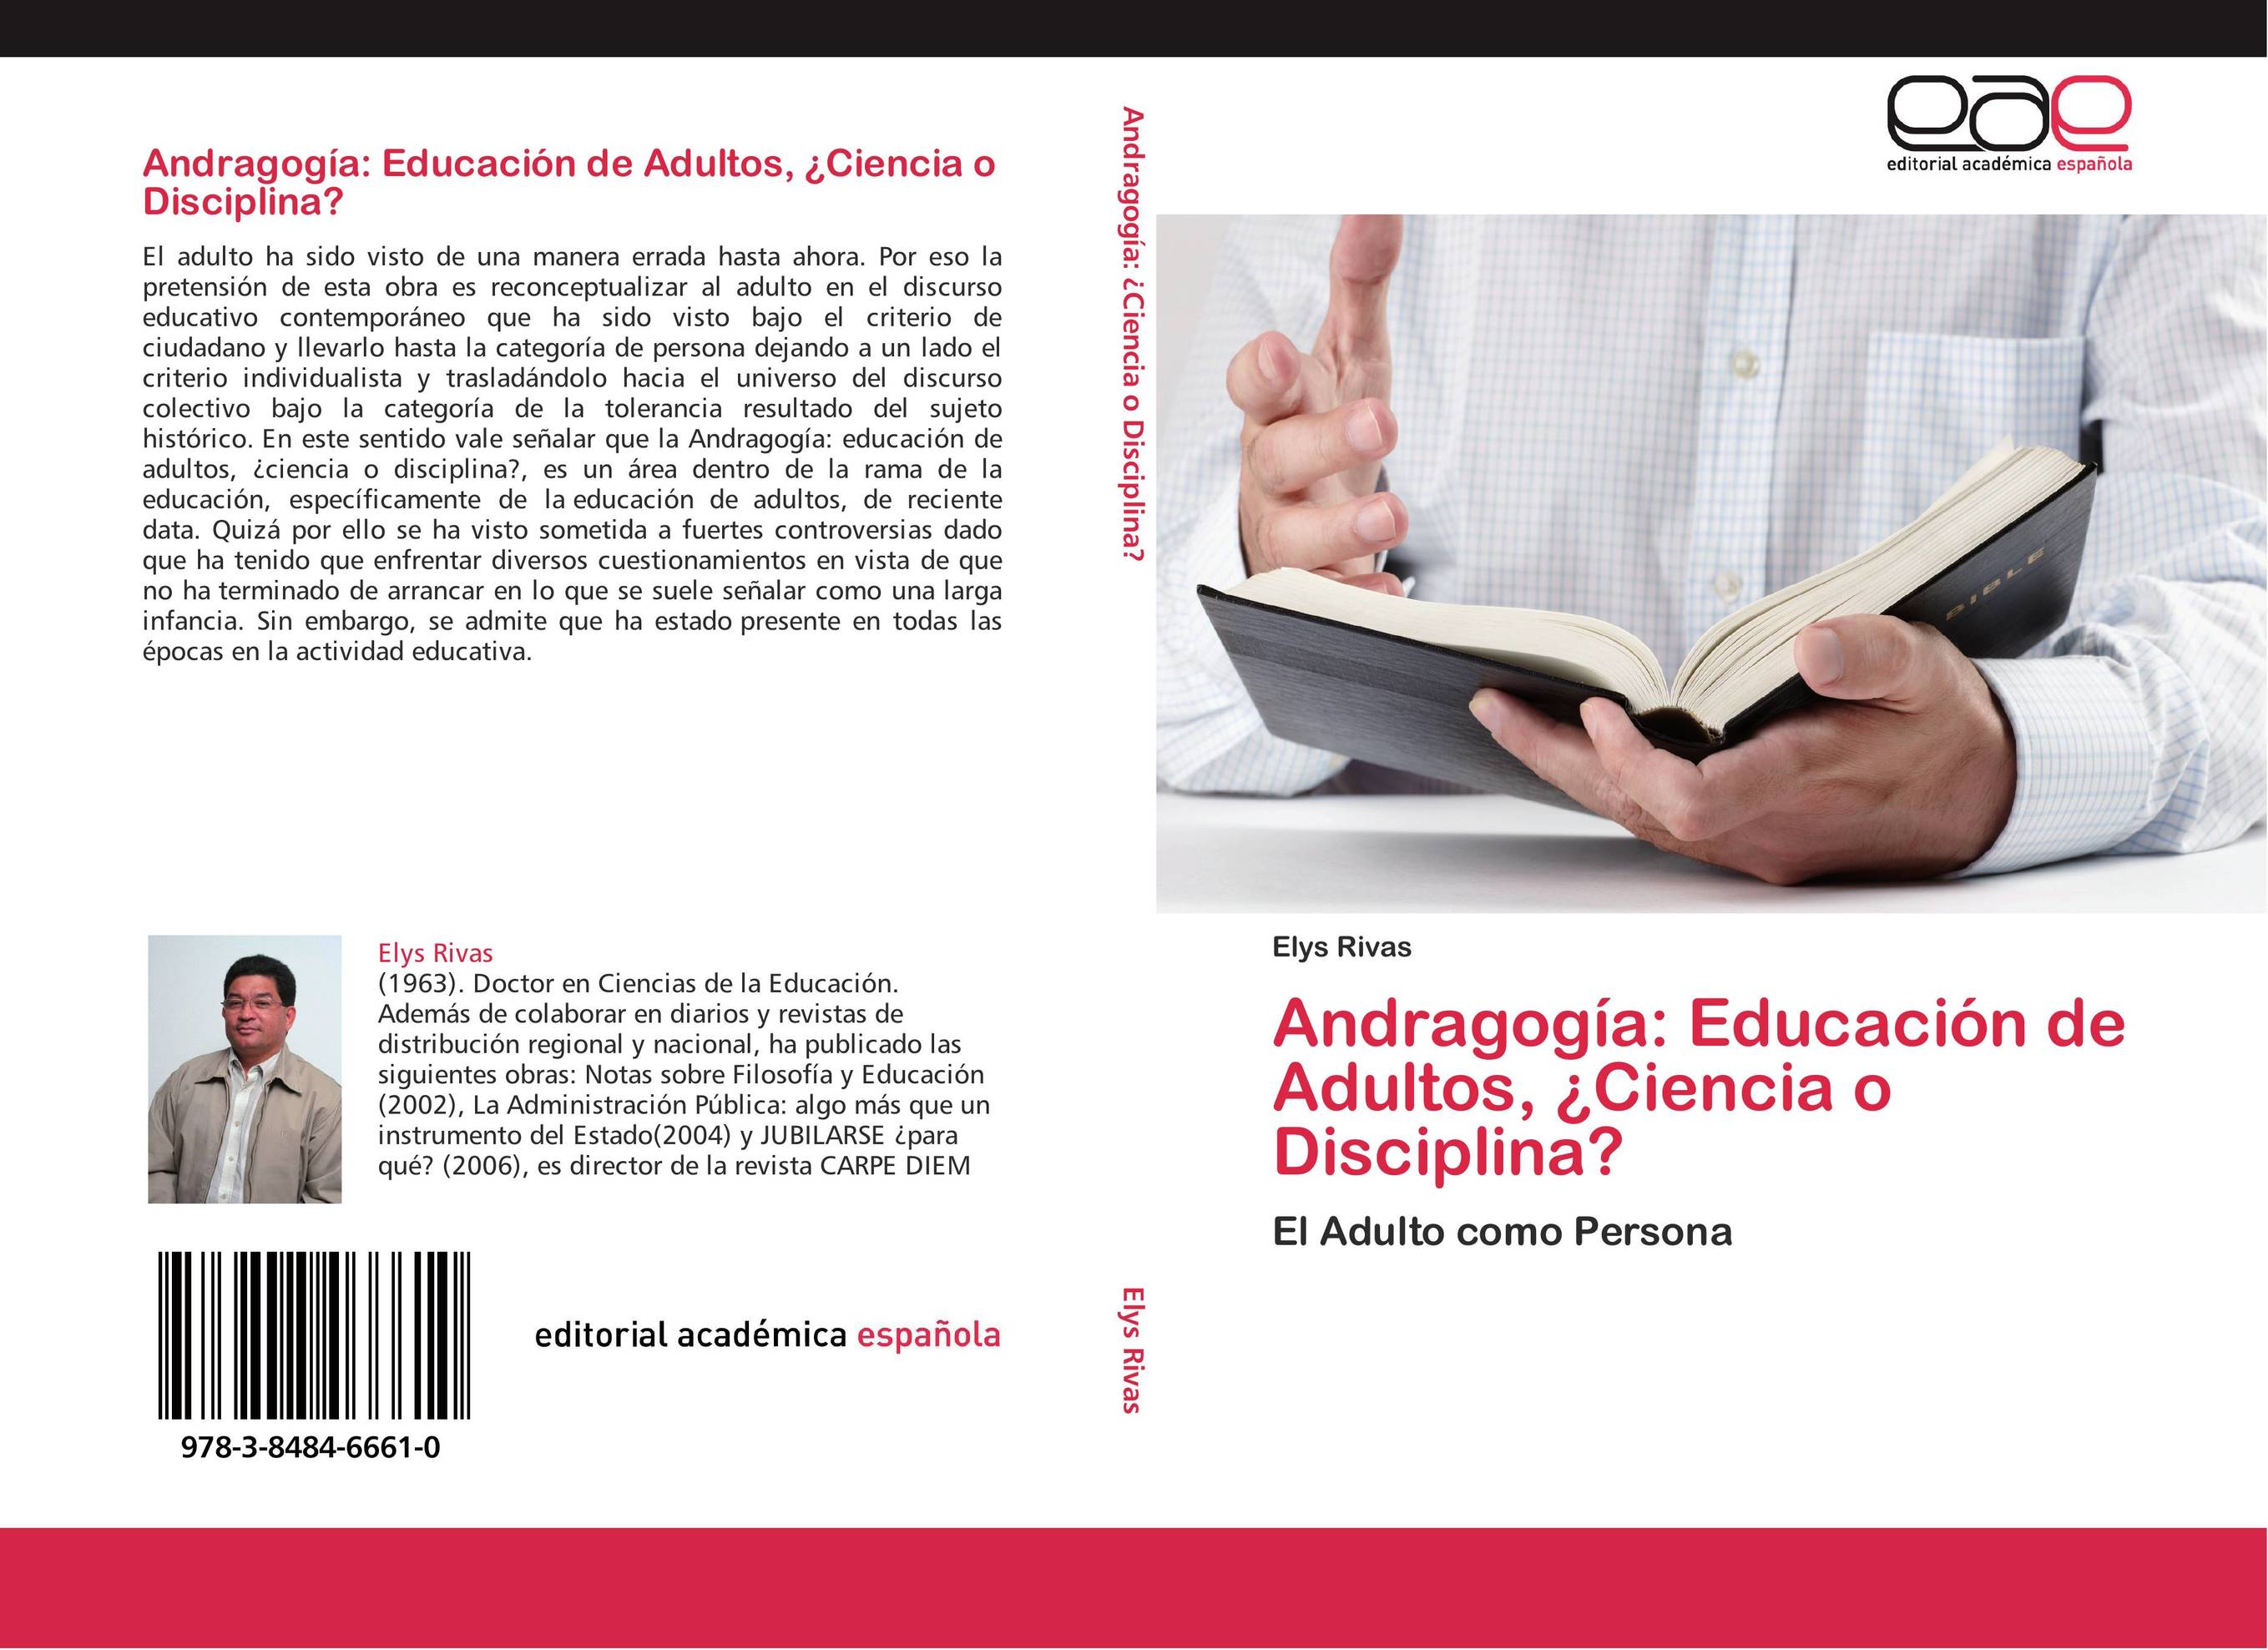 Andragogía: Educación de Adultos, ¿Ciencia o Disciplina?